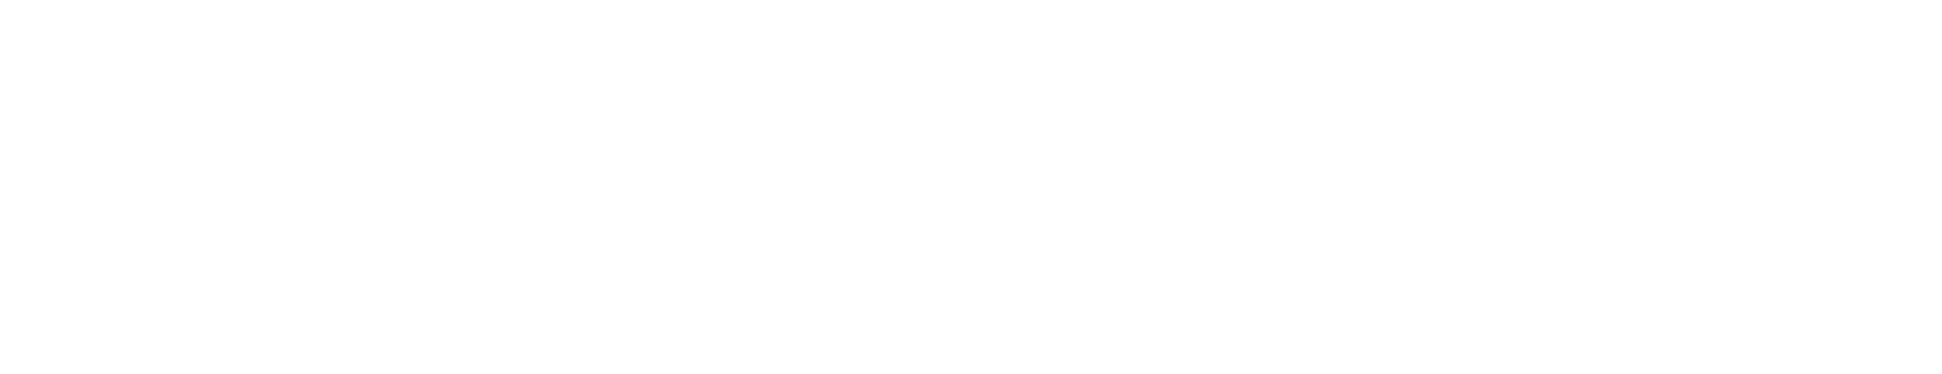 Los Angeles County Health Services